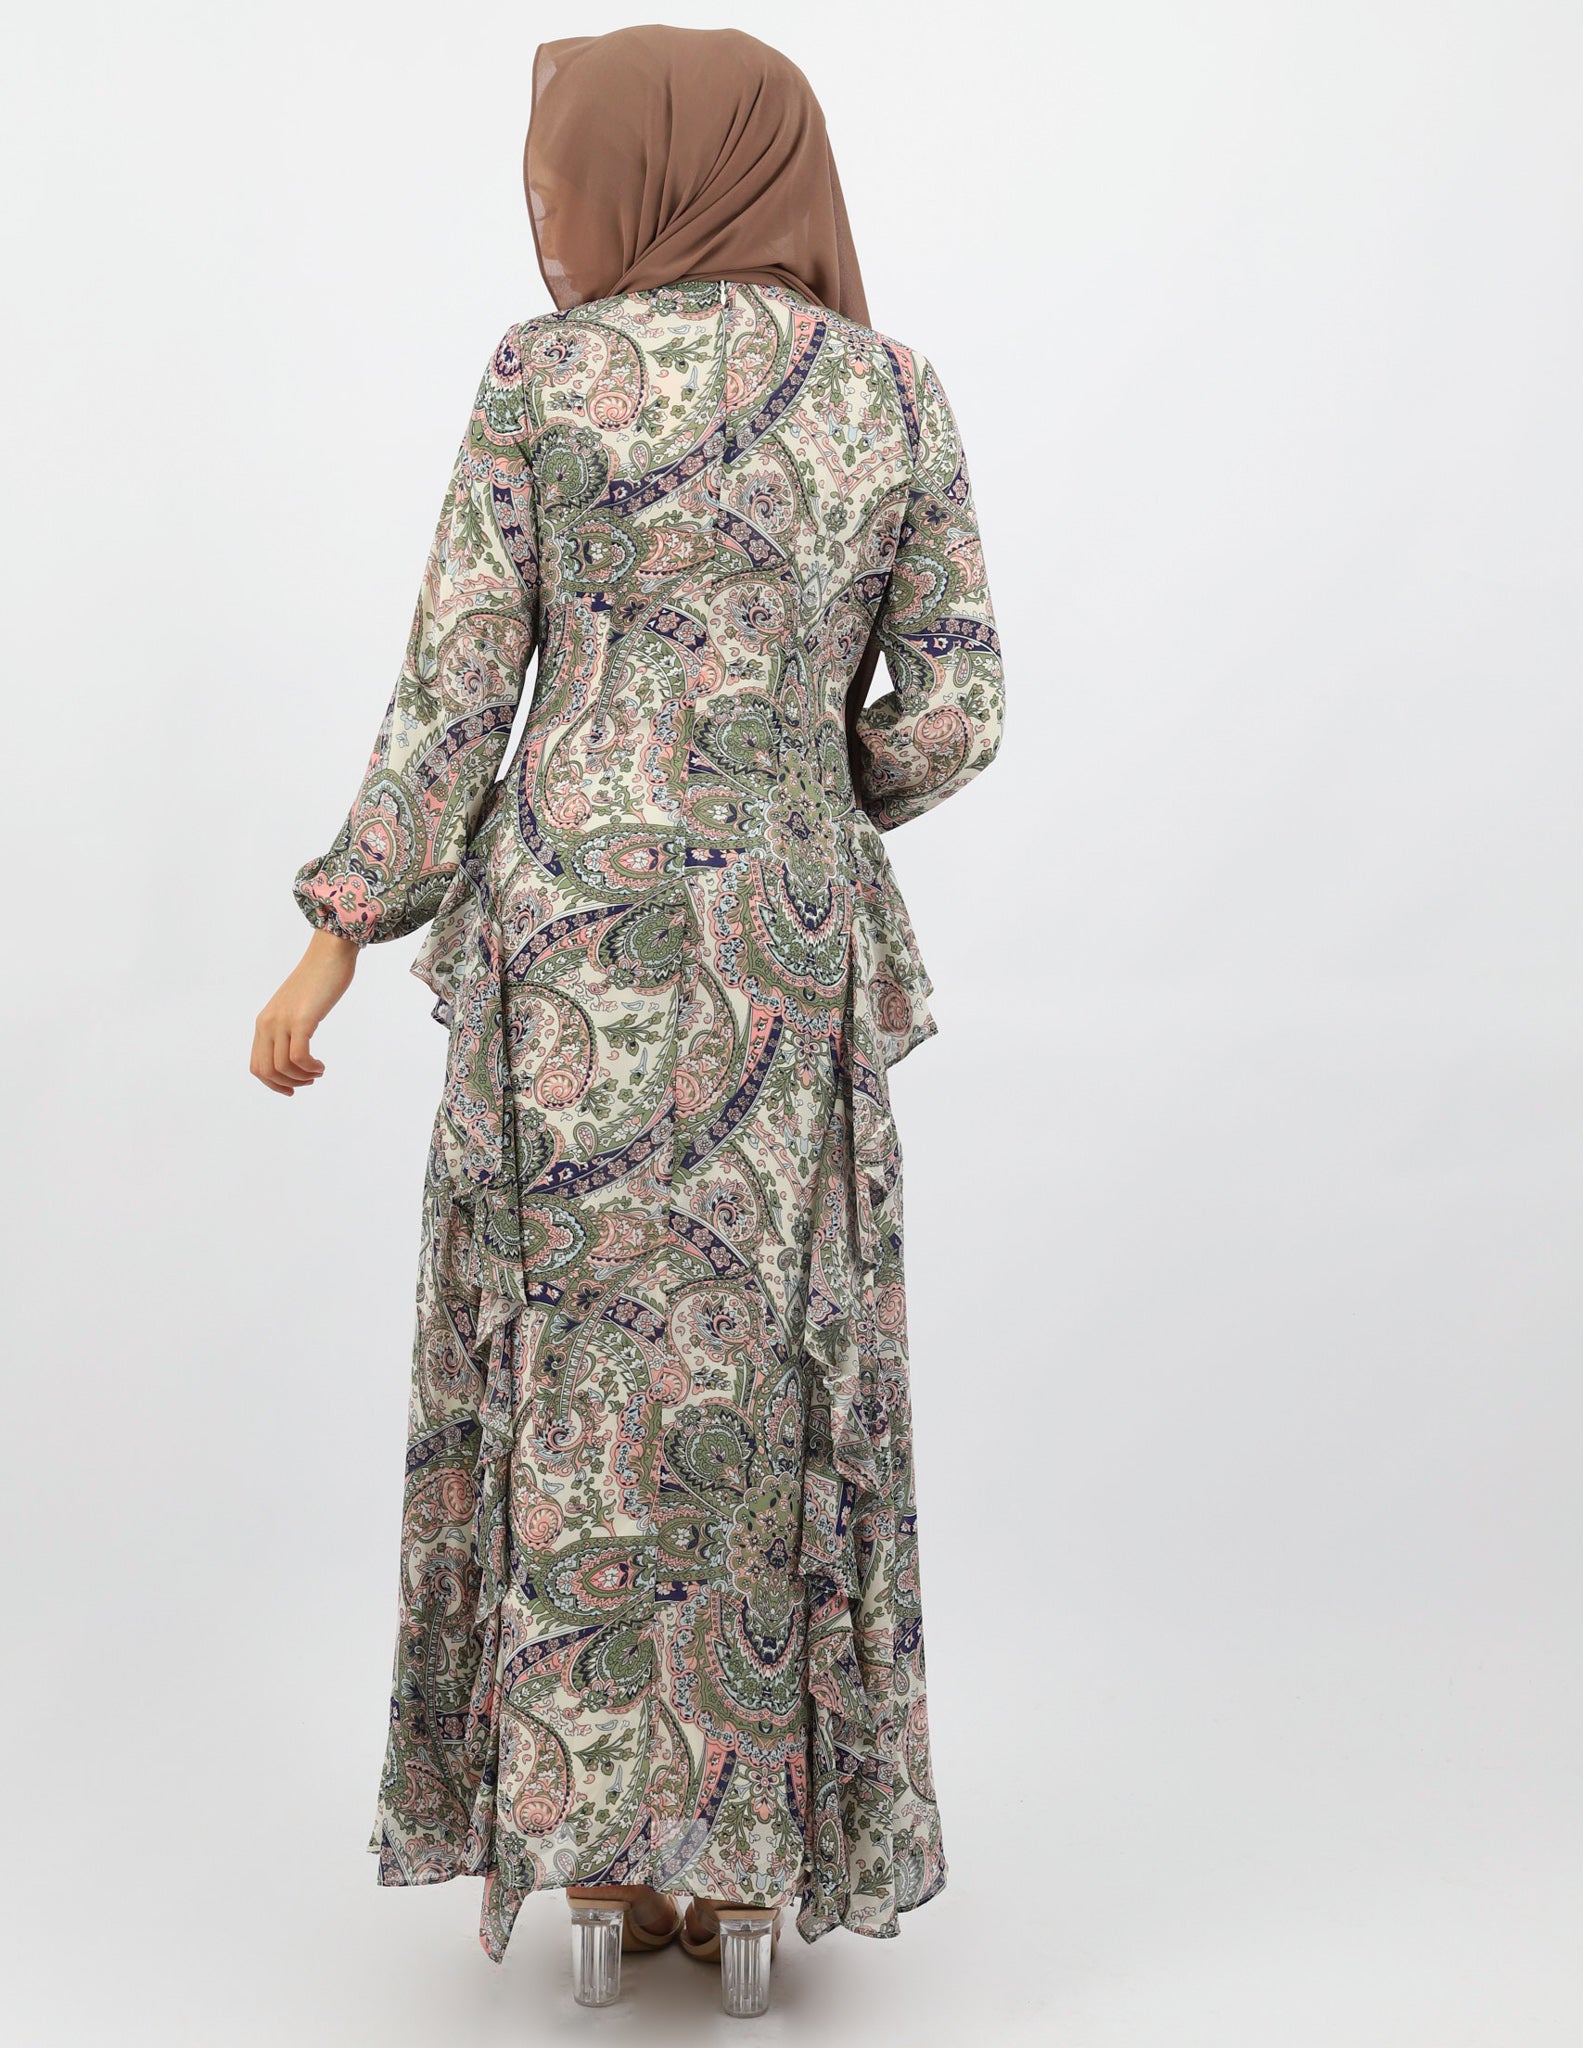 M7789Paisleyprint-dress-abaya